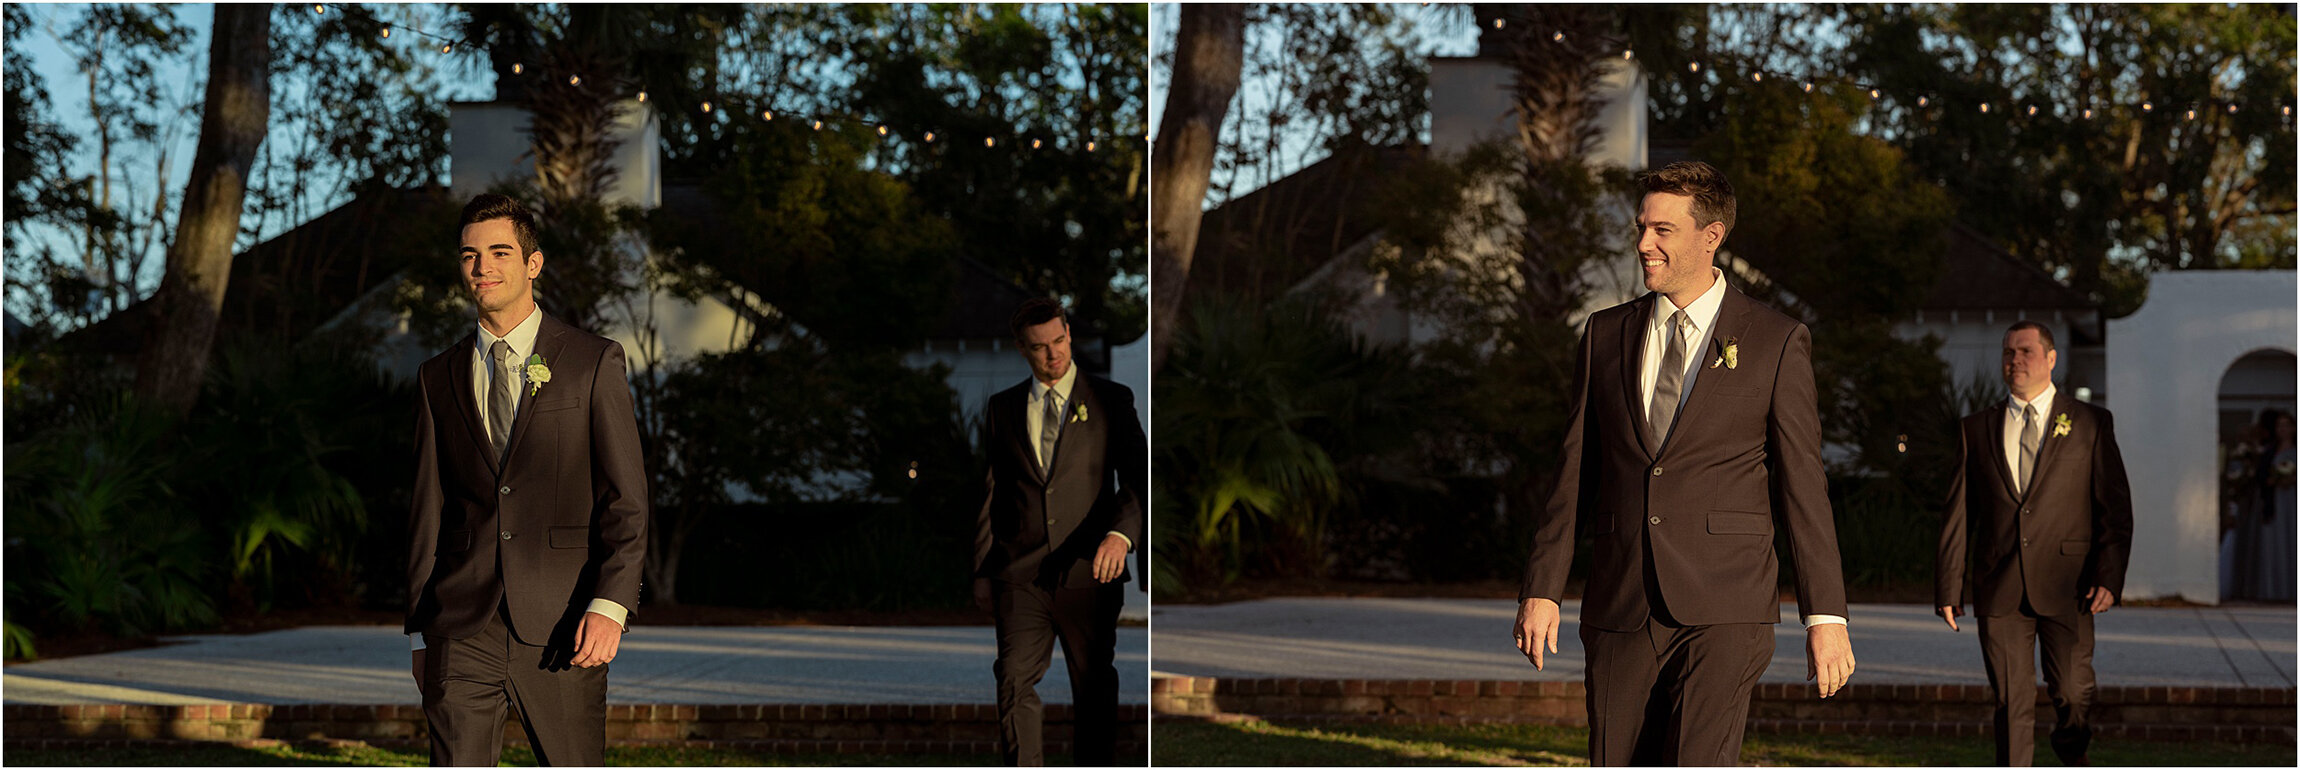 ©FianderFoto_Charleston South Carolina_Wedding Photographer_DD_115.jpg